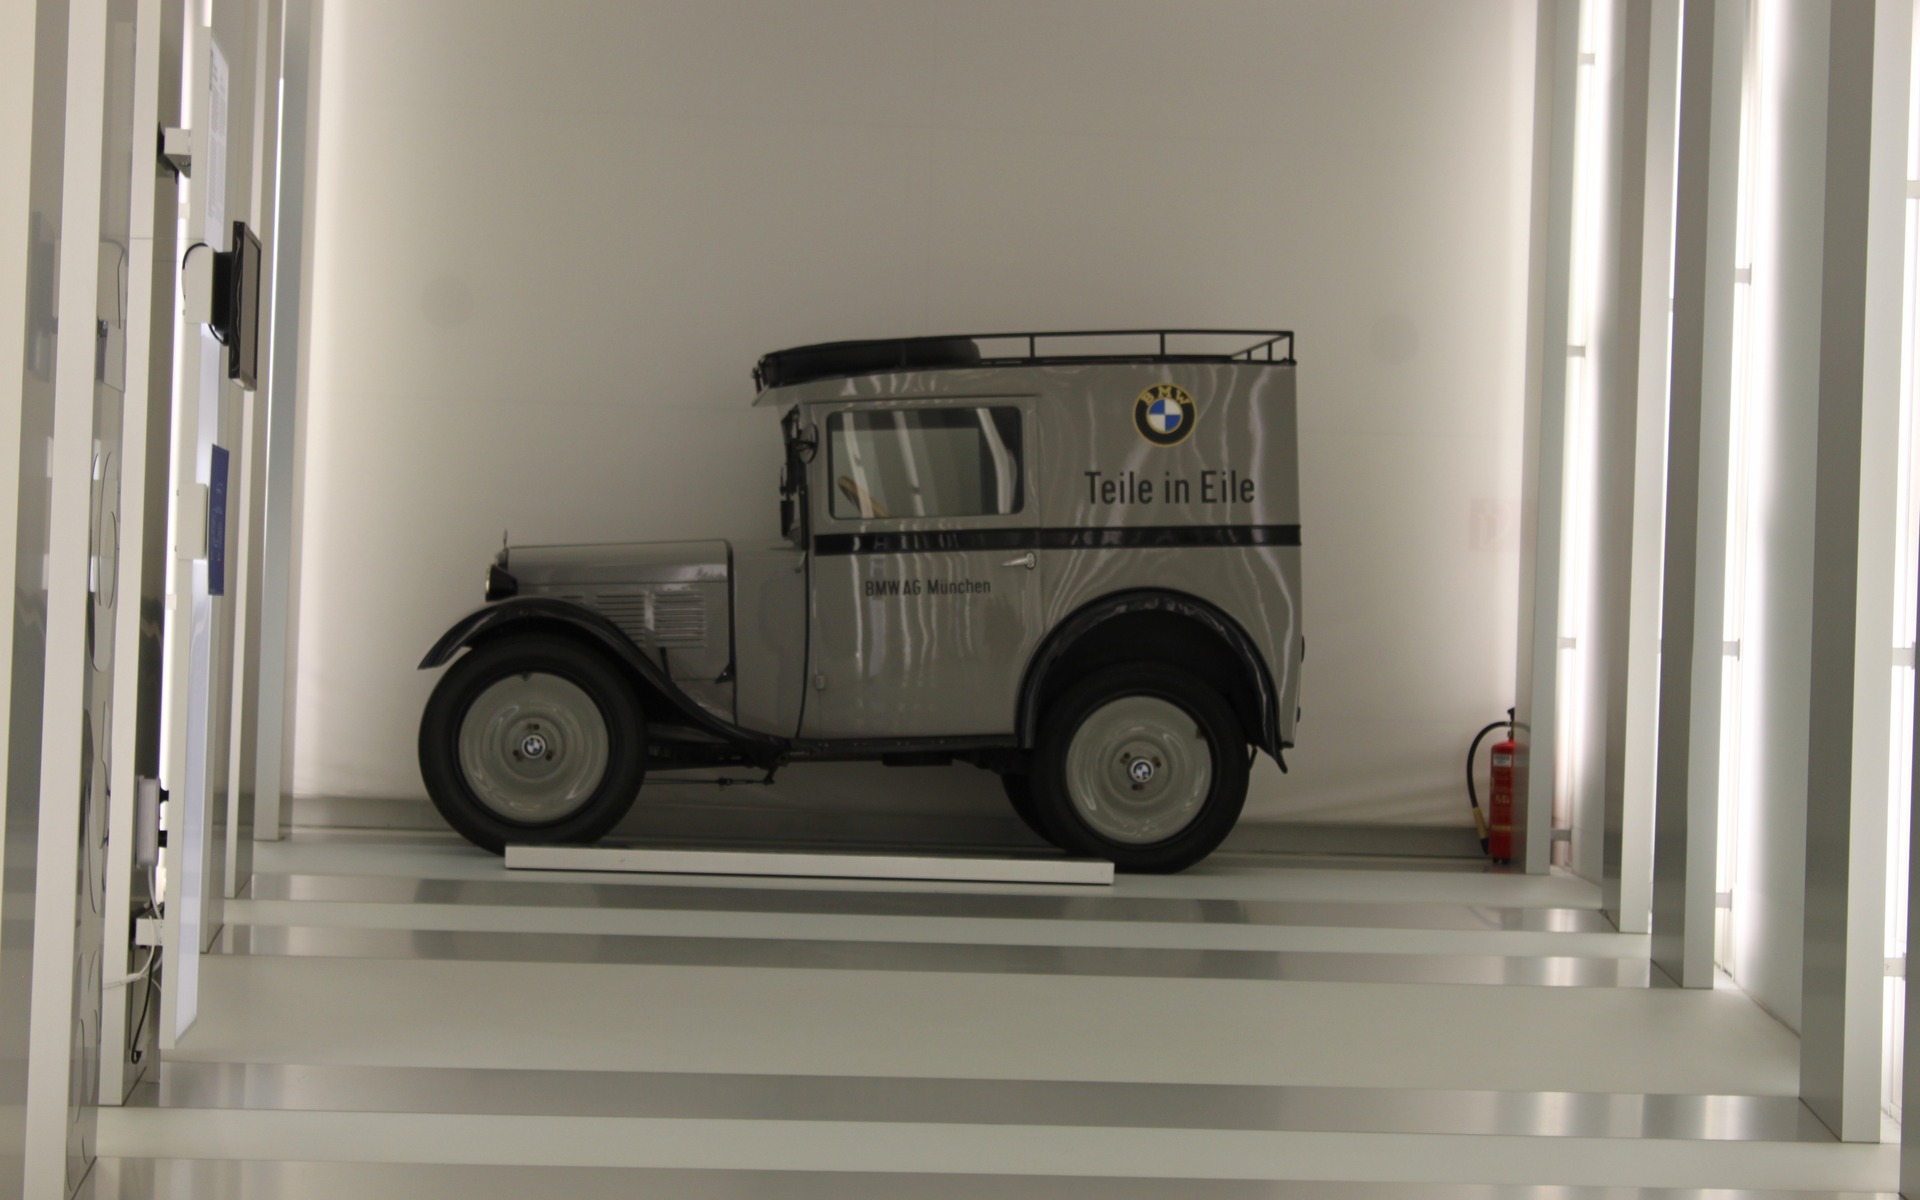 1930s BMW service vehicle